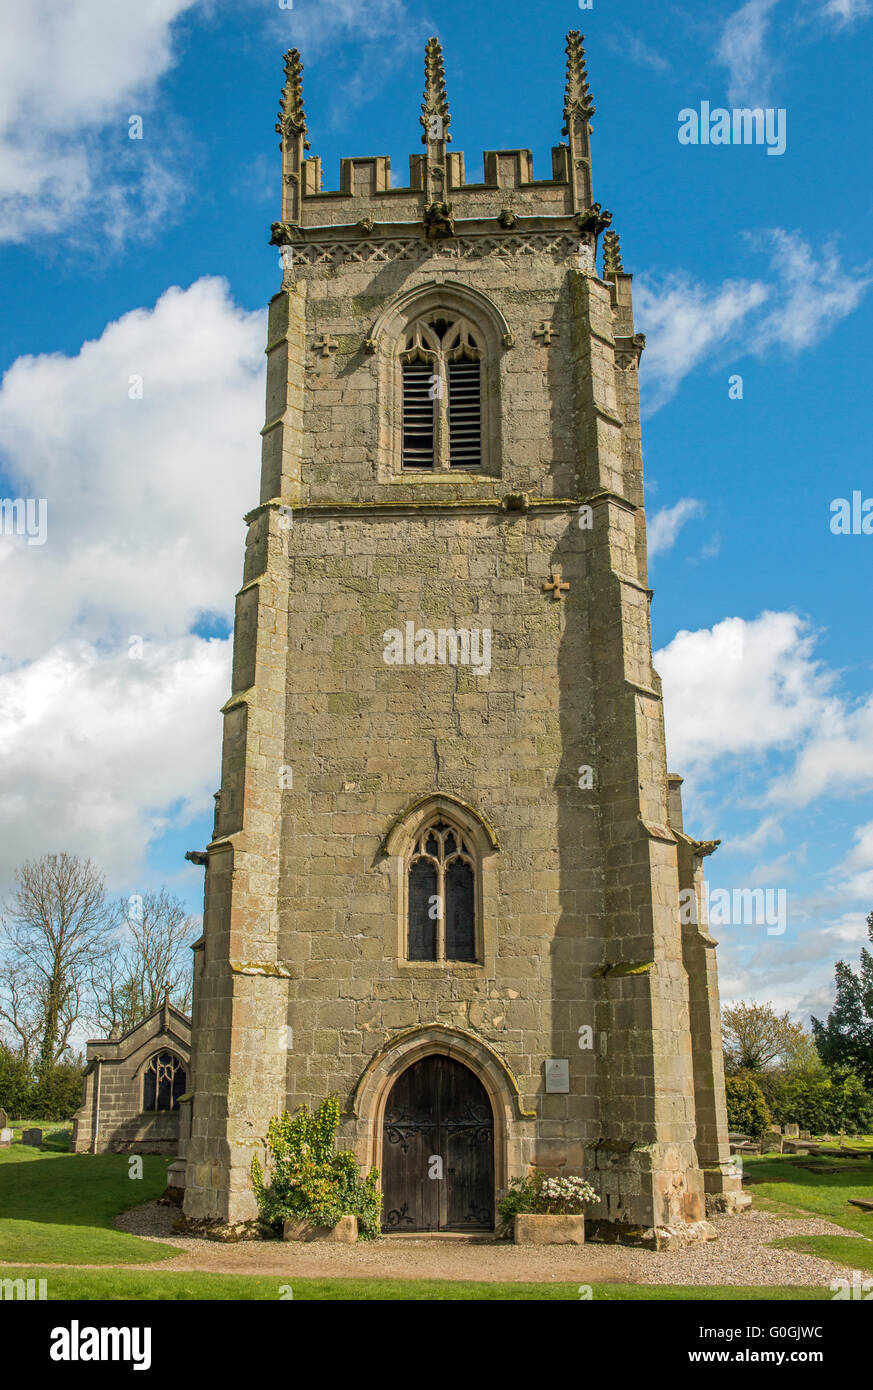 St Mary Magdalene's Church at Battlefield in Shrewsbury, Shropshire Stock Photo